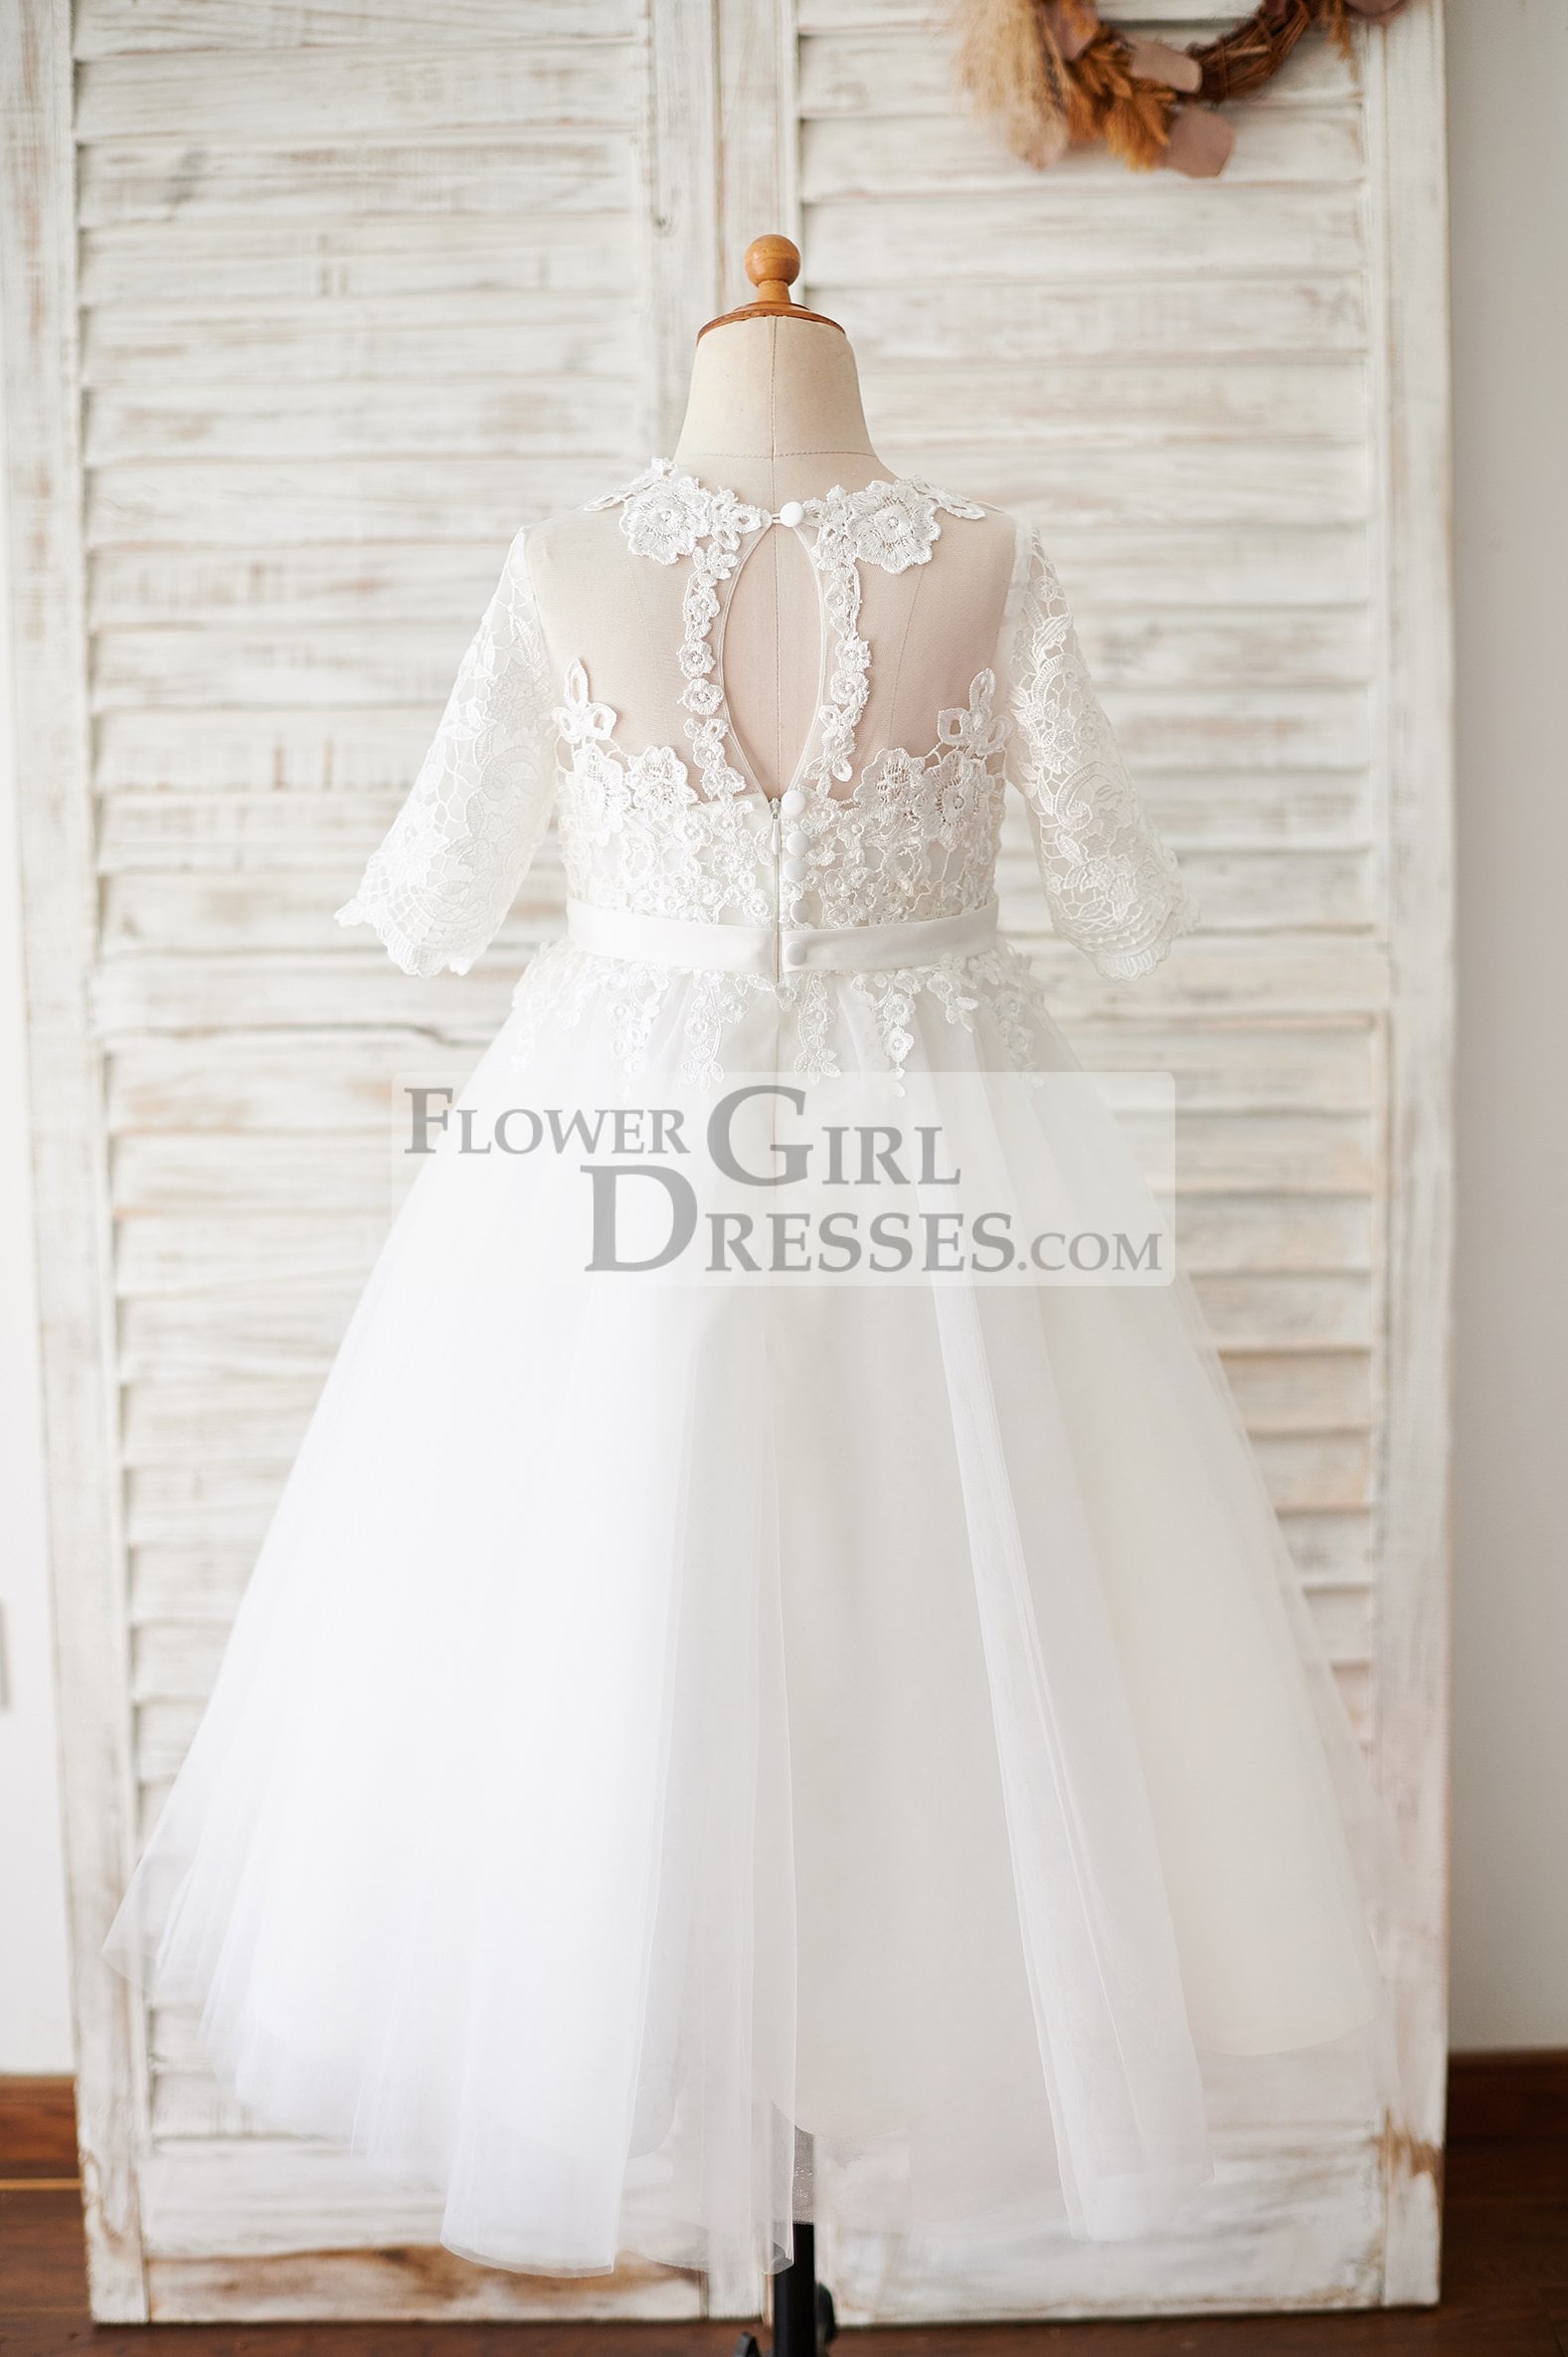 Princess Short Elbow Sleeves Ivory Lace Tulle Wedding Flower Girl Dress